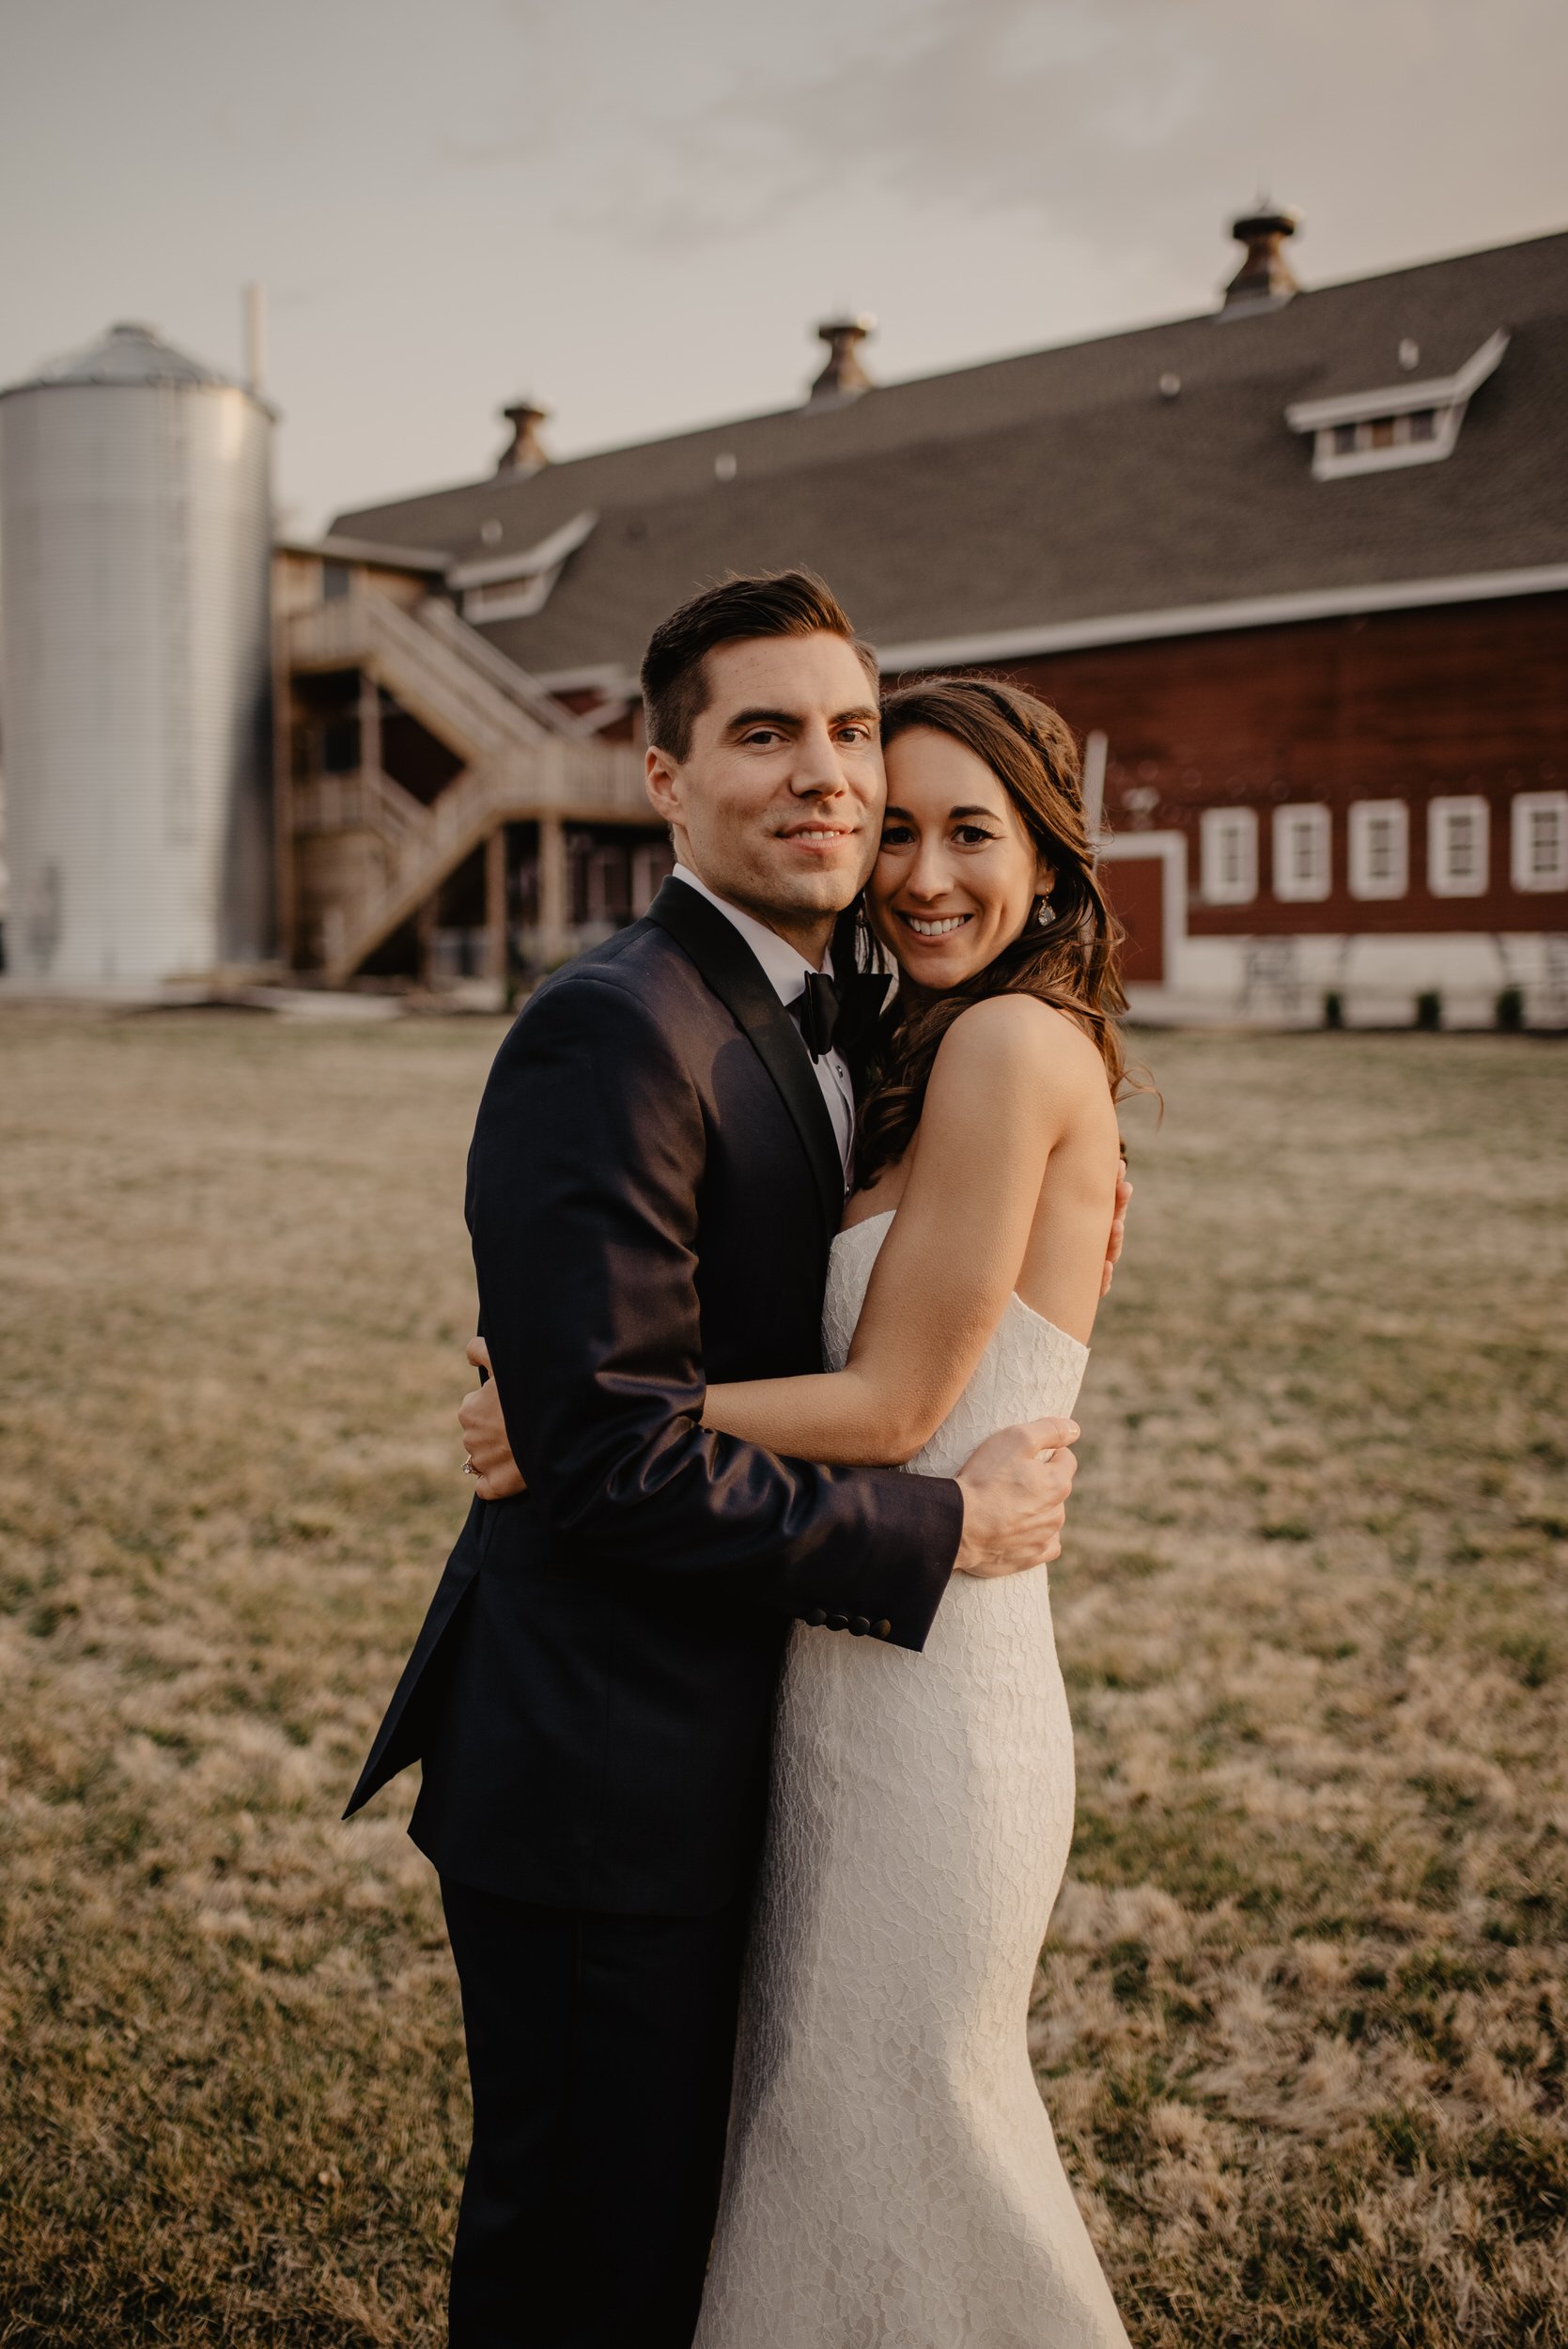 The Barn at the Ackerhurst Dairy Farm Omaha Nebraska Wedding Kaylie Sirek Photography094.jpg